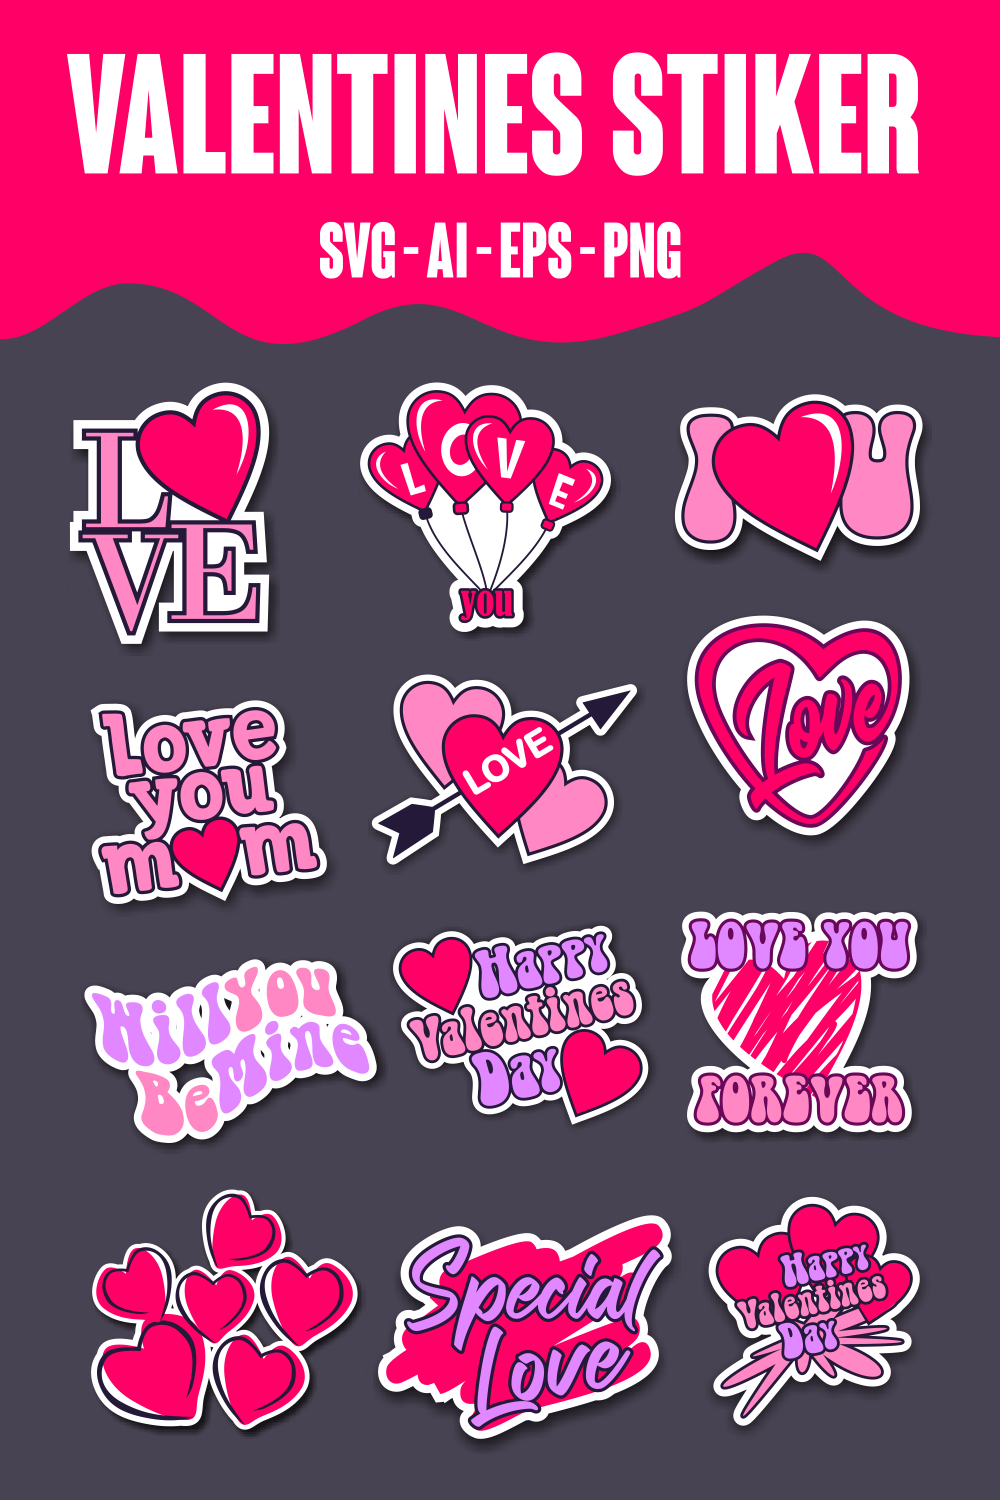 Valentines Sticker svg files pinterest preview image.